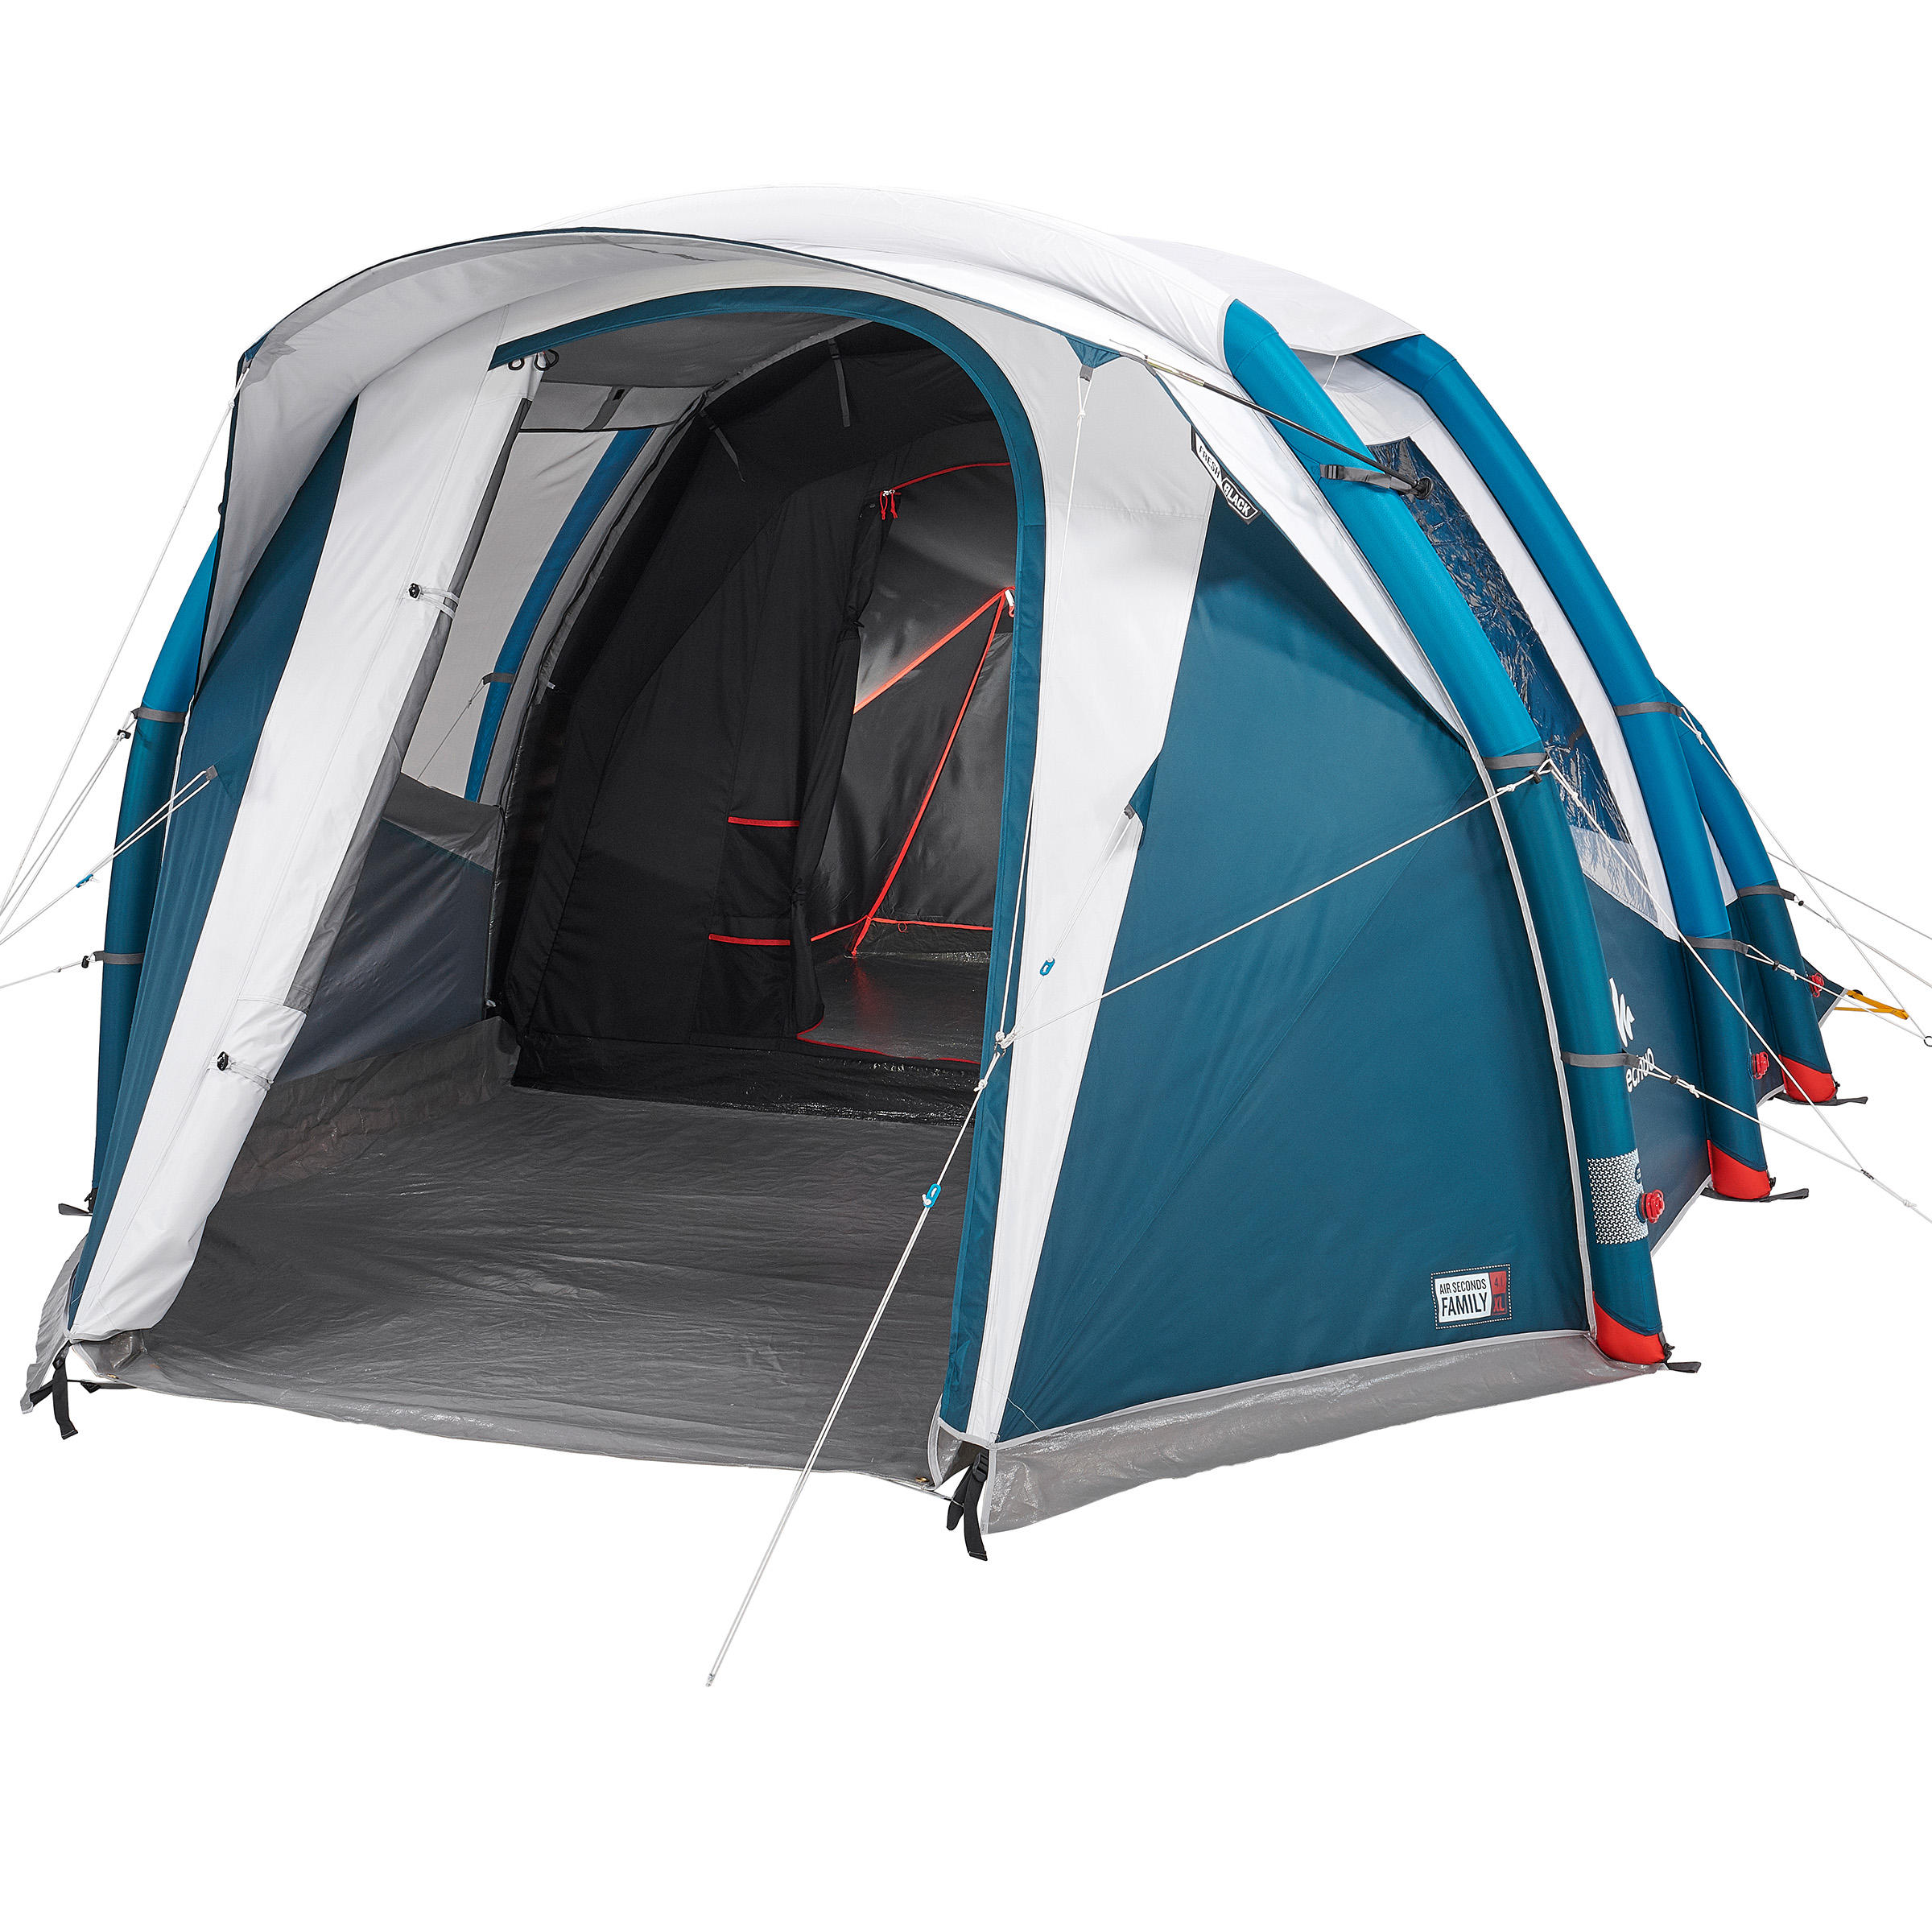 decathlon 6 man inflatable tent